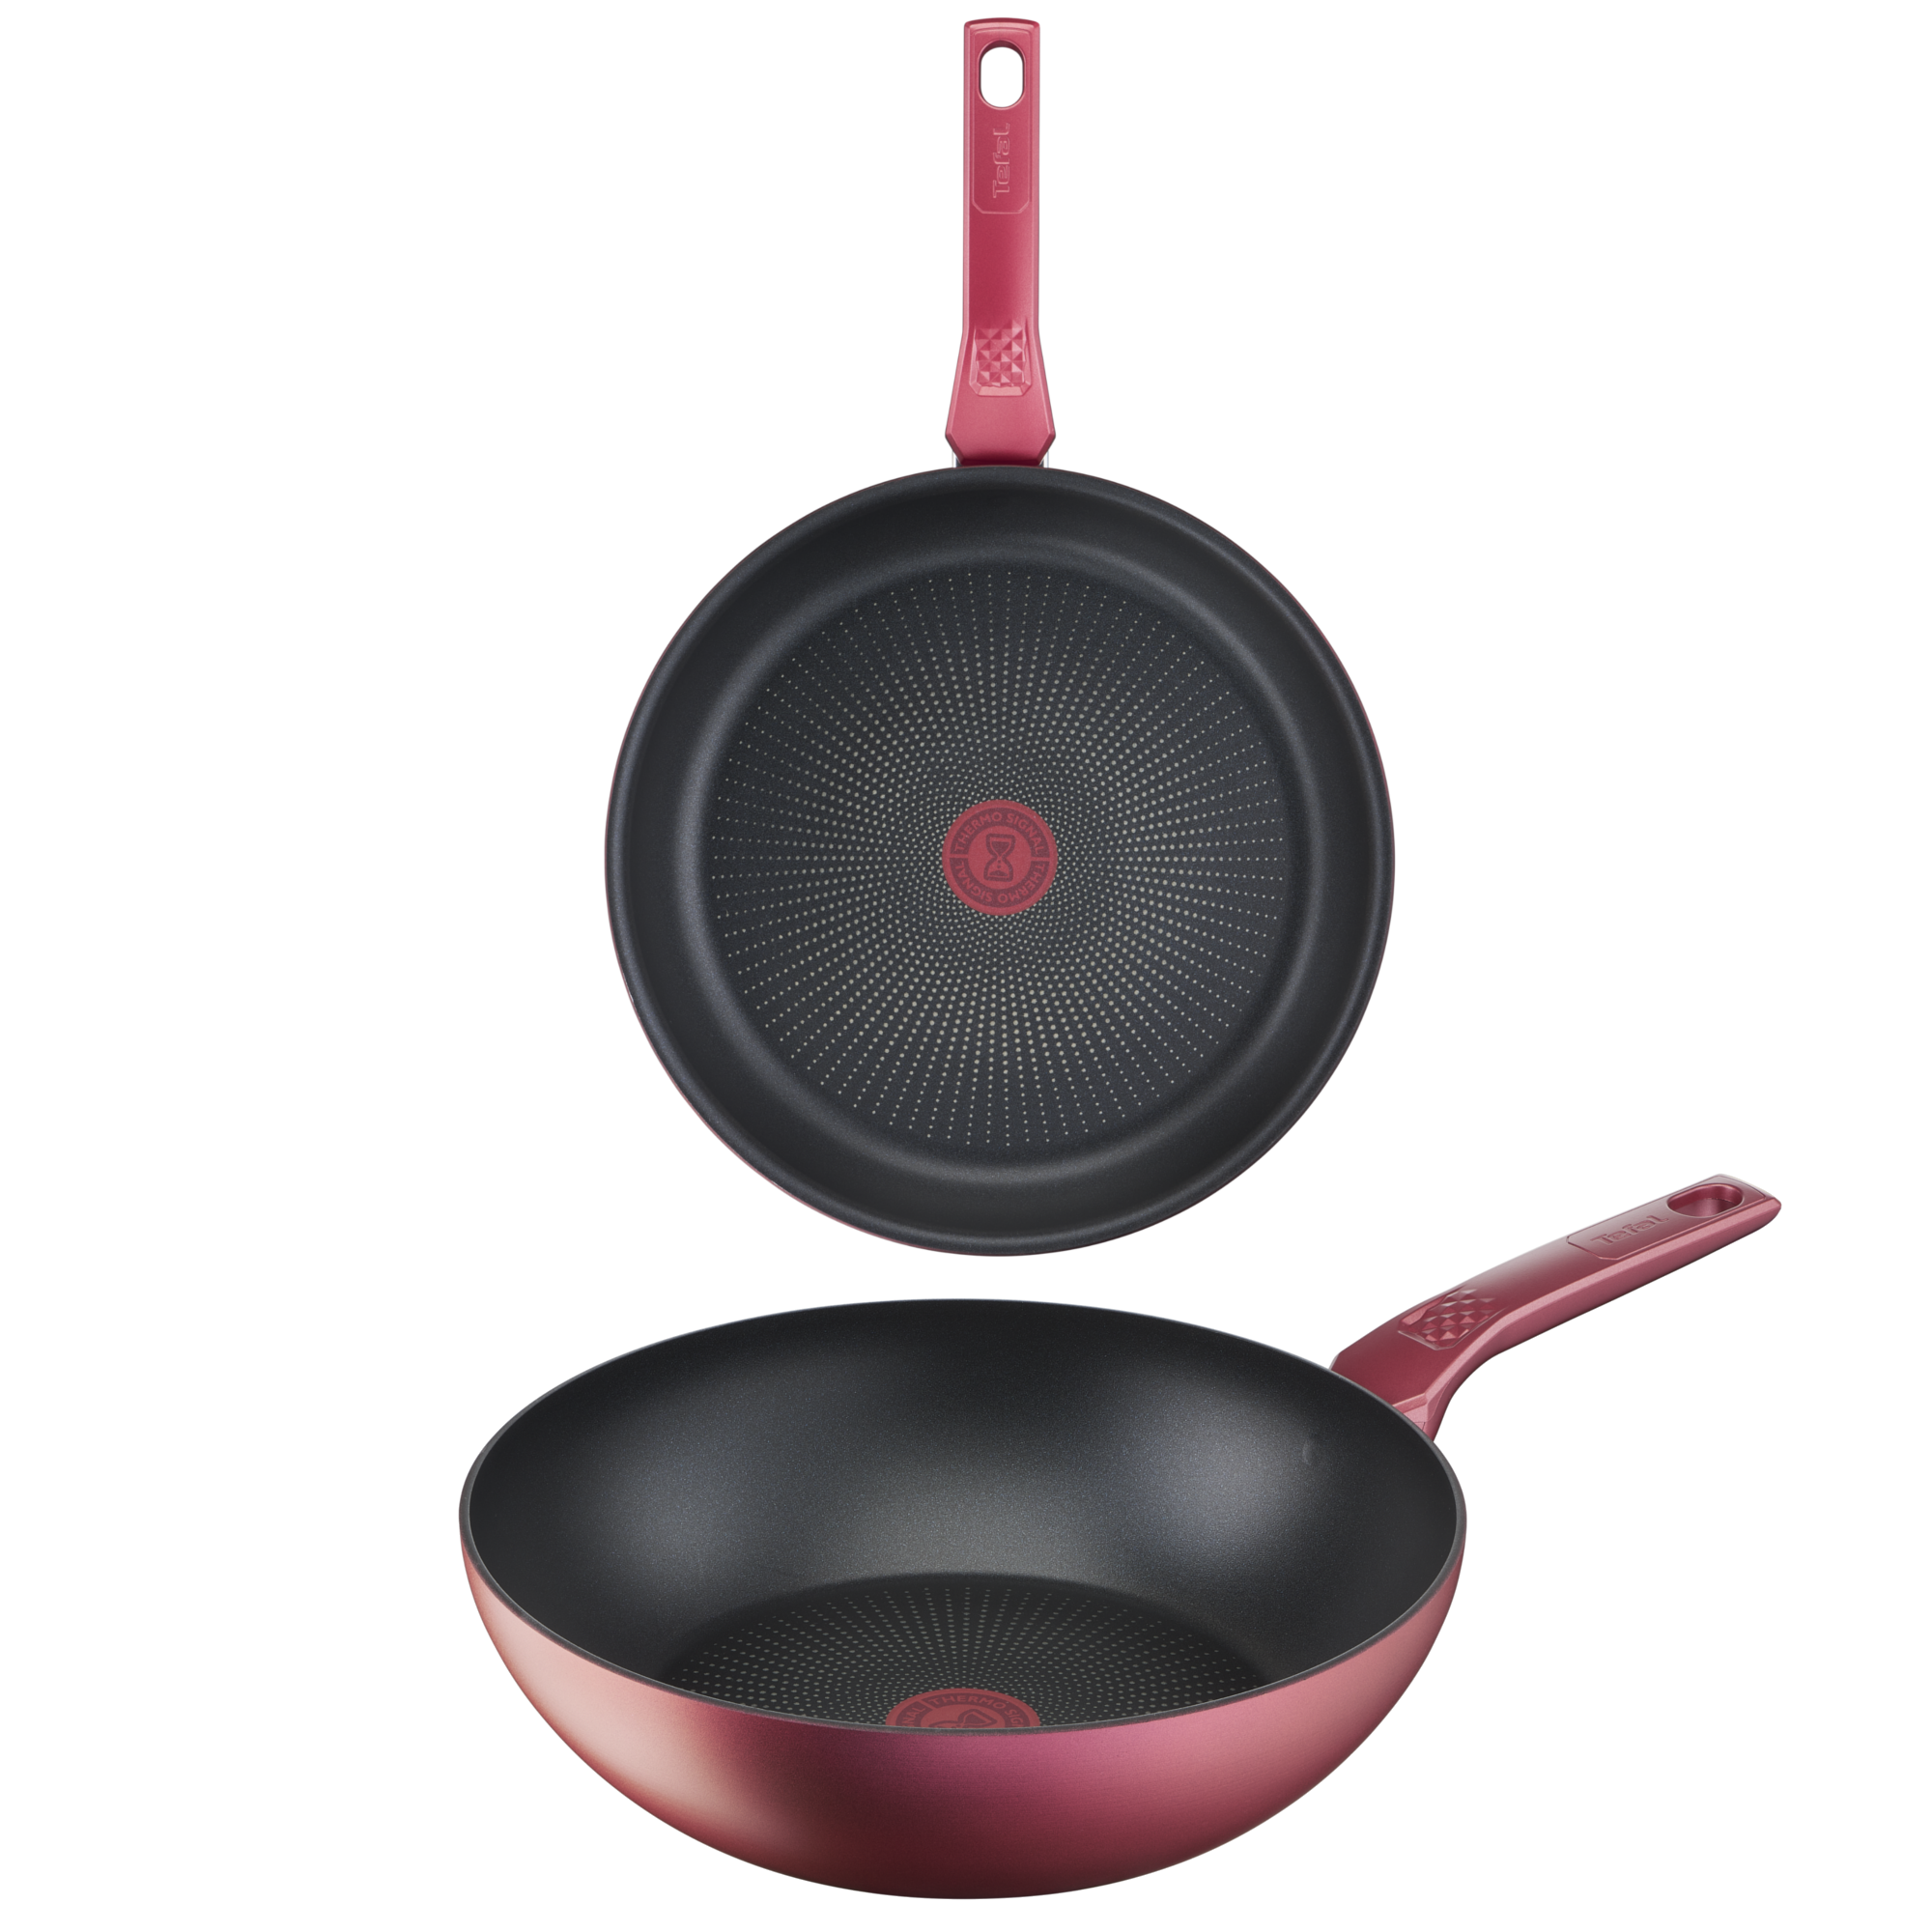 2 Sets of Tefal pans (1 pan 28 cm + 1 wok pan 28 cm) with induction